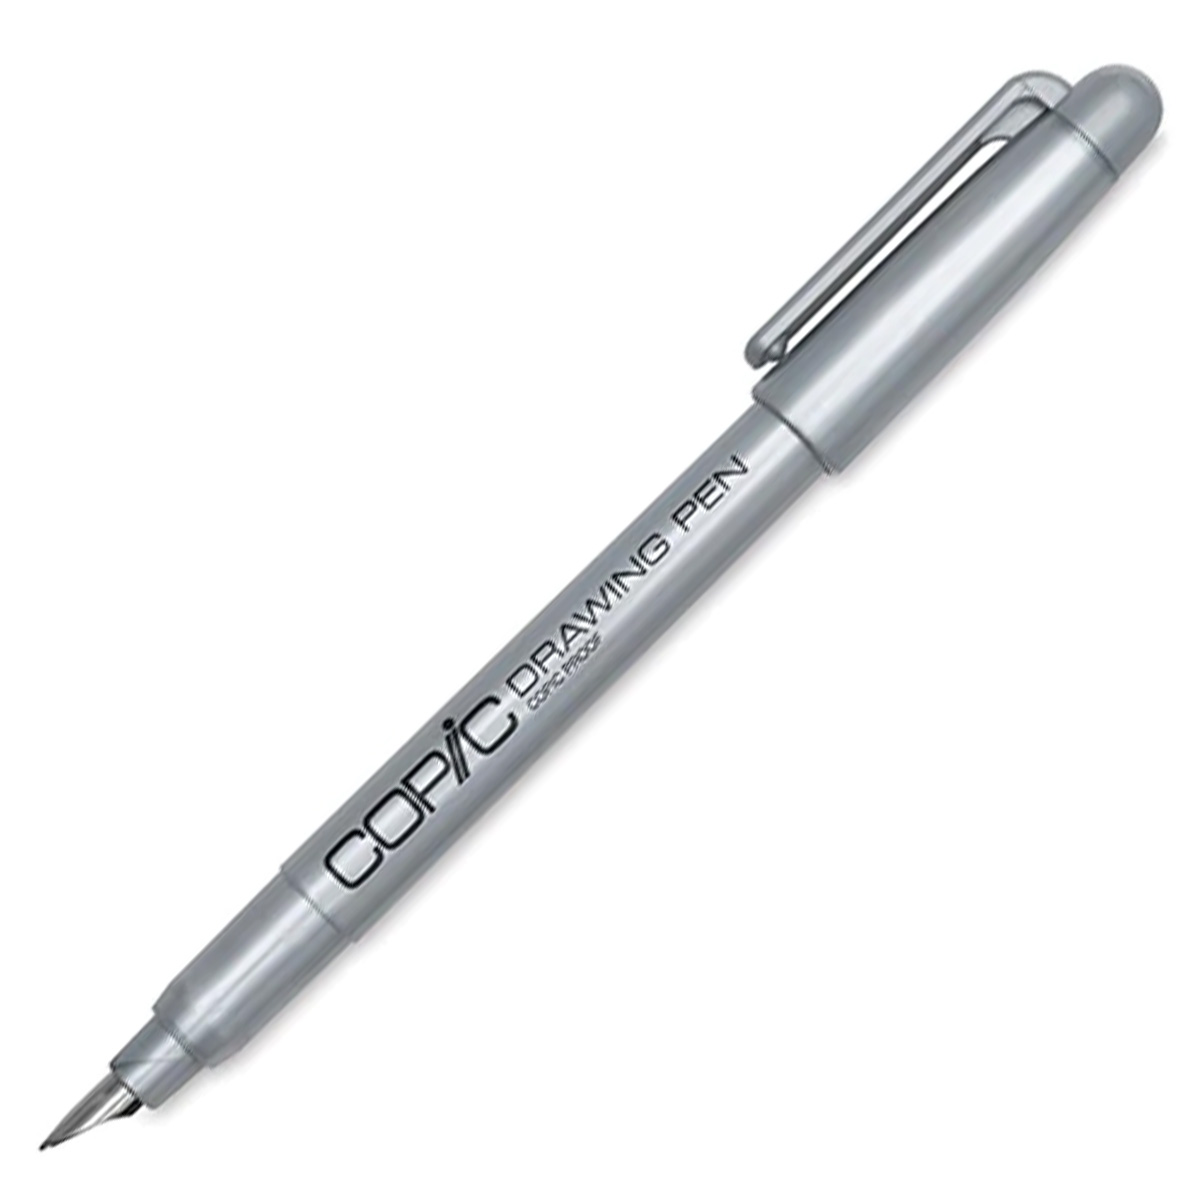 Copic Drawing Pen 0.1 mm | Pen Store